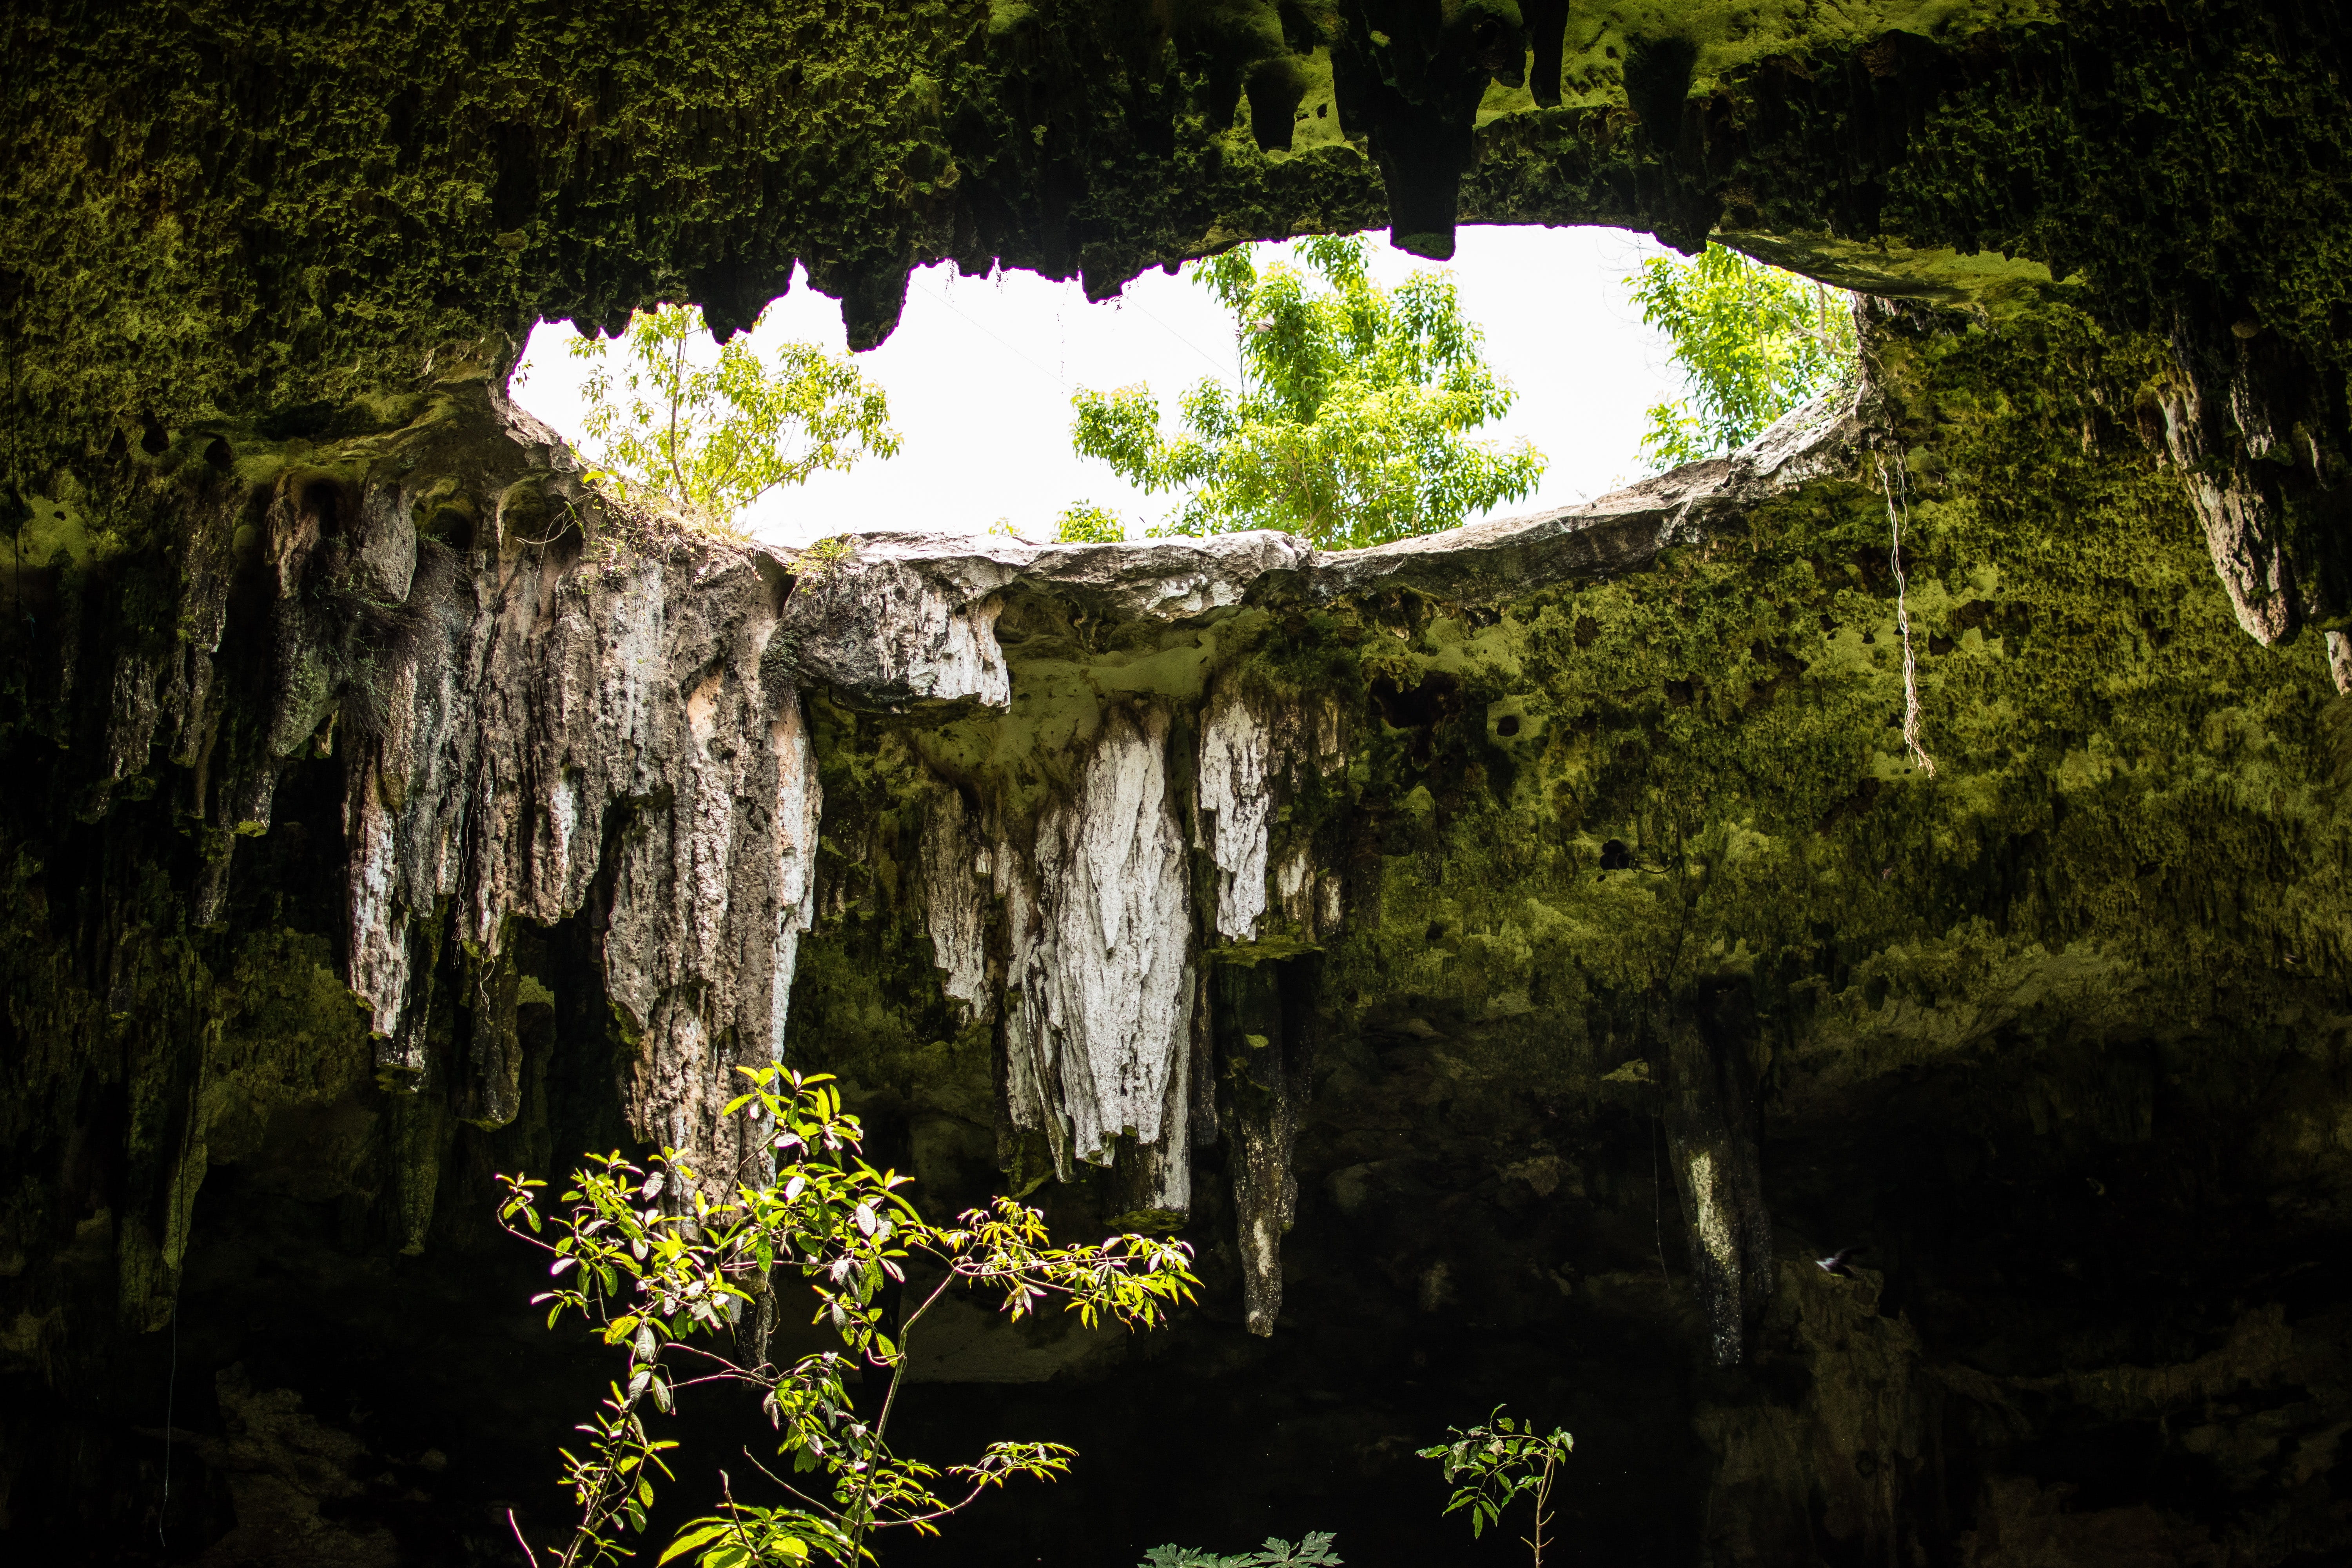 hole, cenote, cave, so, underground, yucatan, pierre, nature